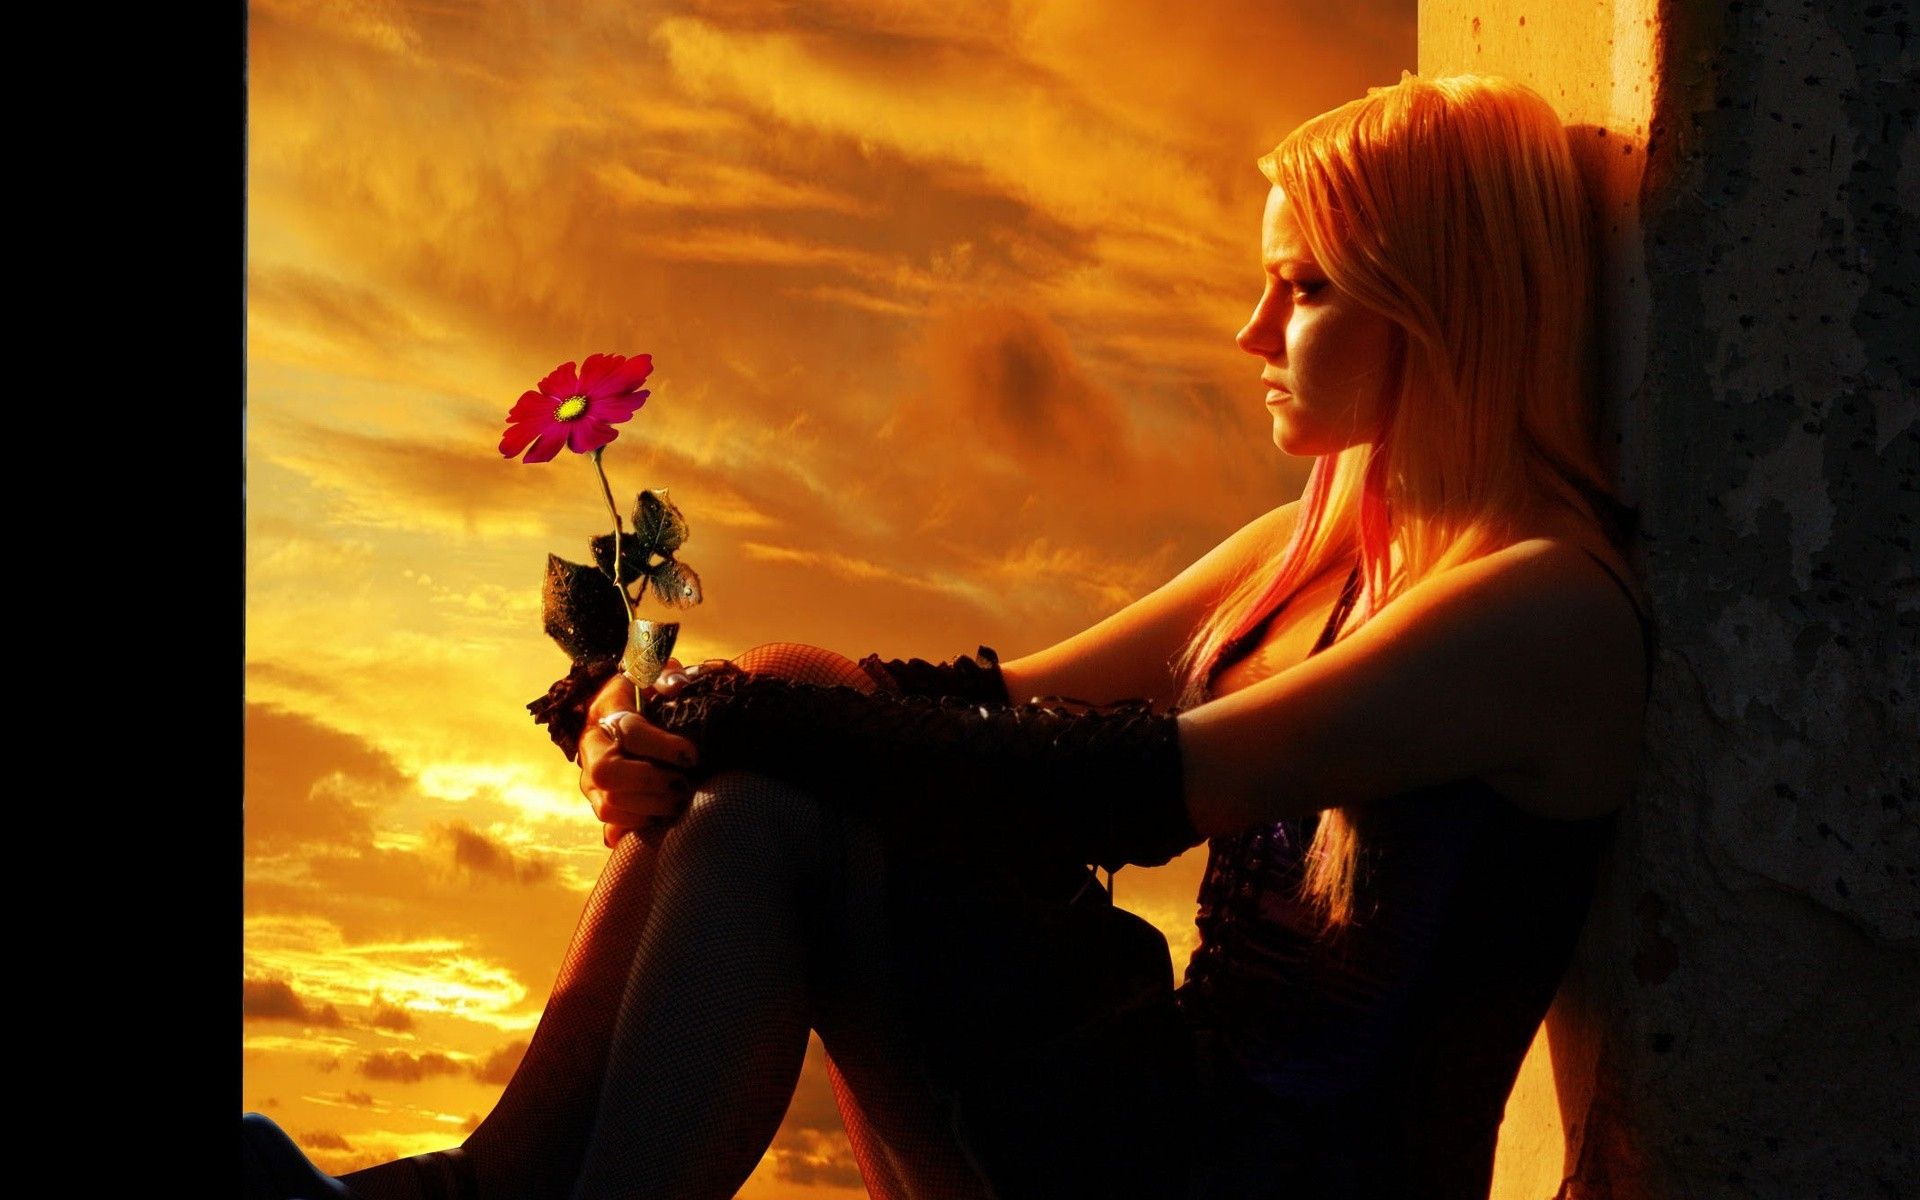 Gothic cg digital manip art mood flower women sky sunset waiting